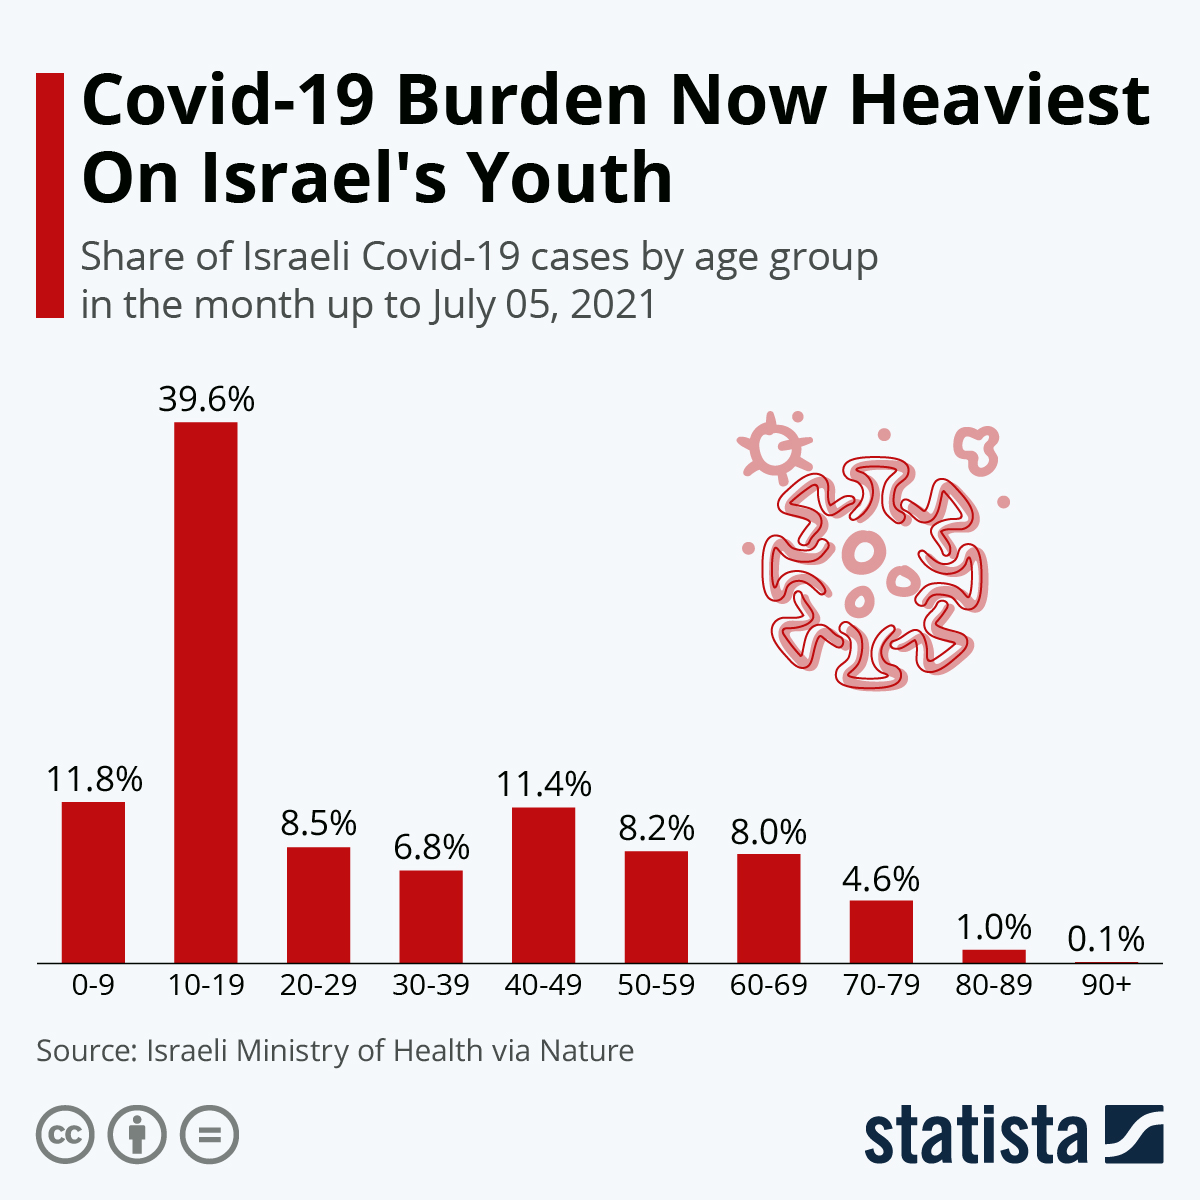 Covid-19 Burden Now Heaviest On Israel's Youth